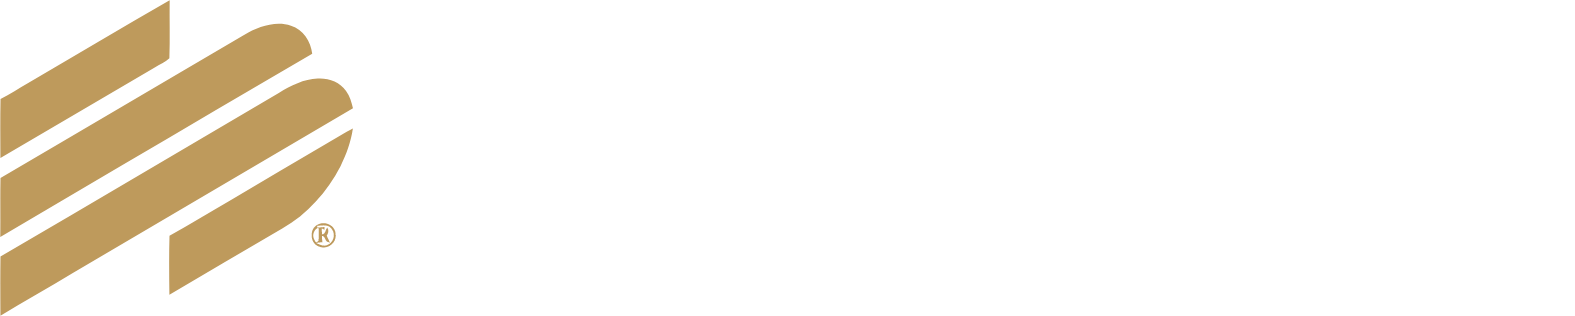 Enterprise Financial Services Corp logo large for dark backgrounds (transparent PNG)